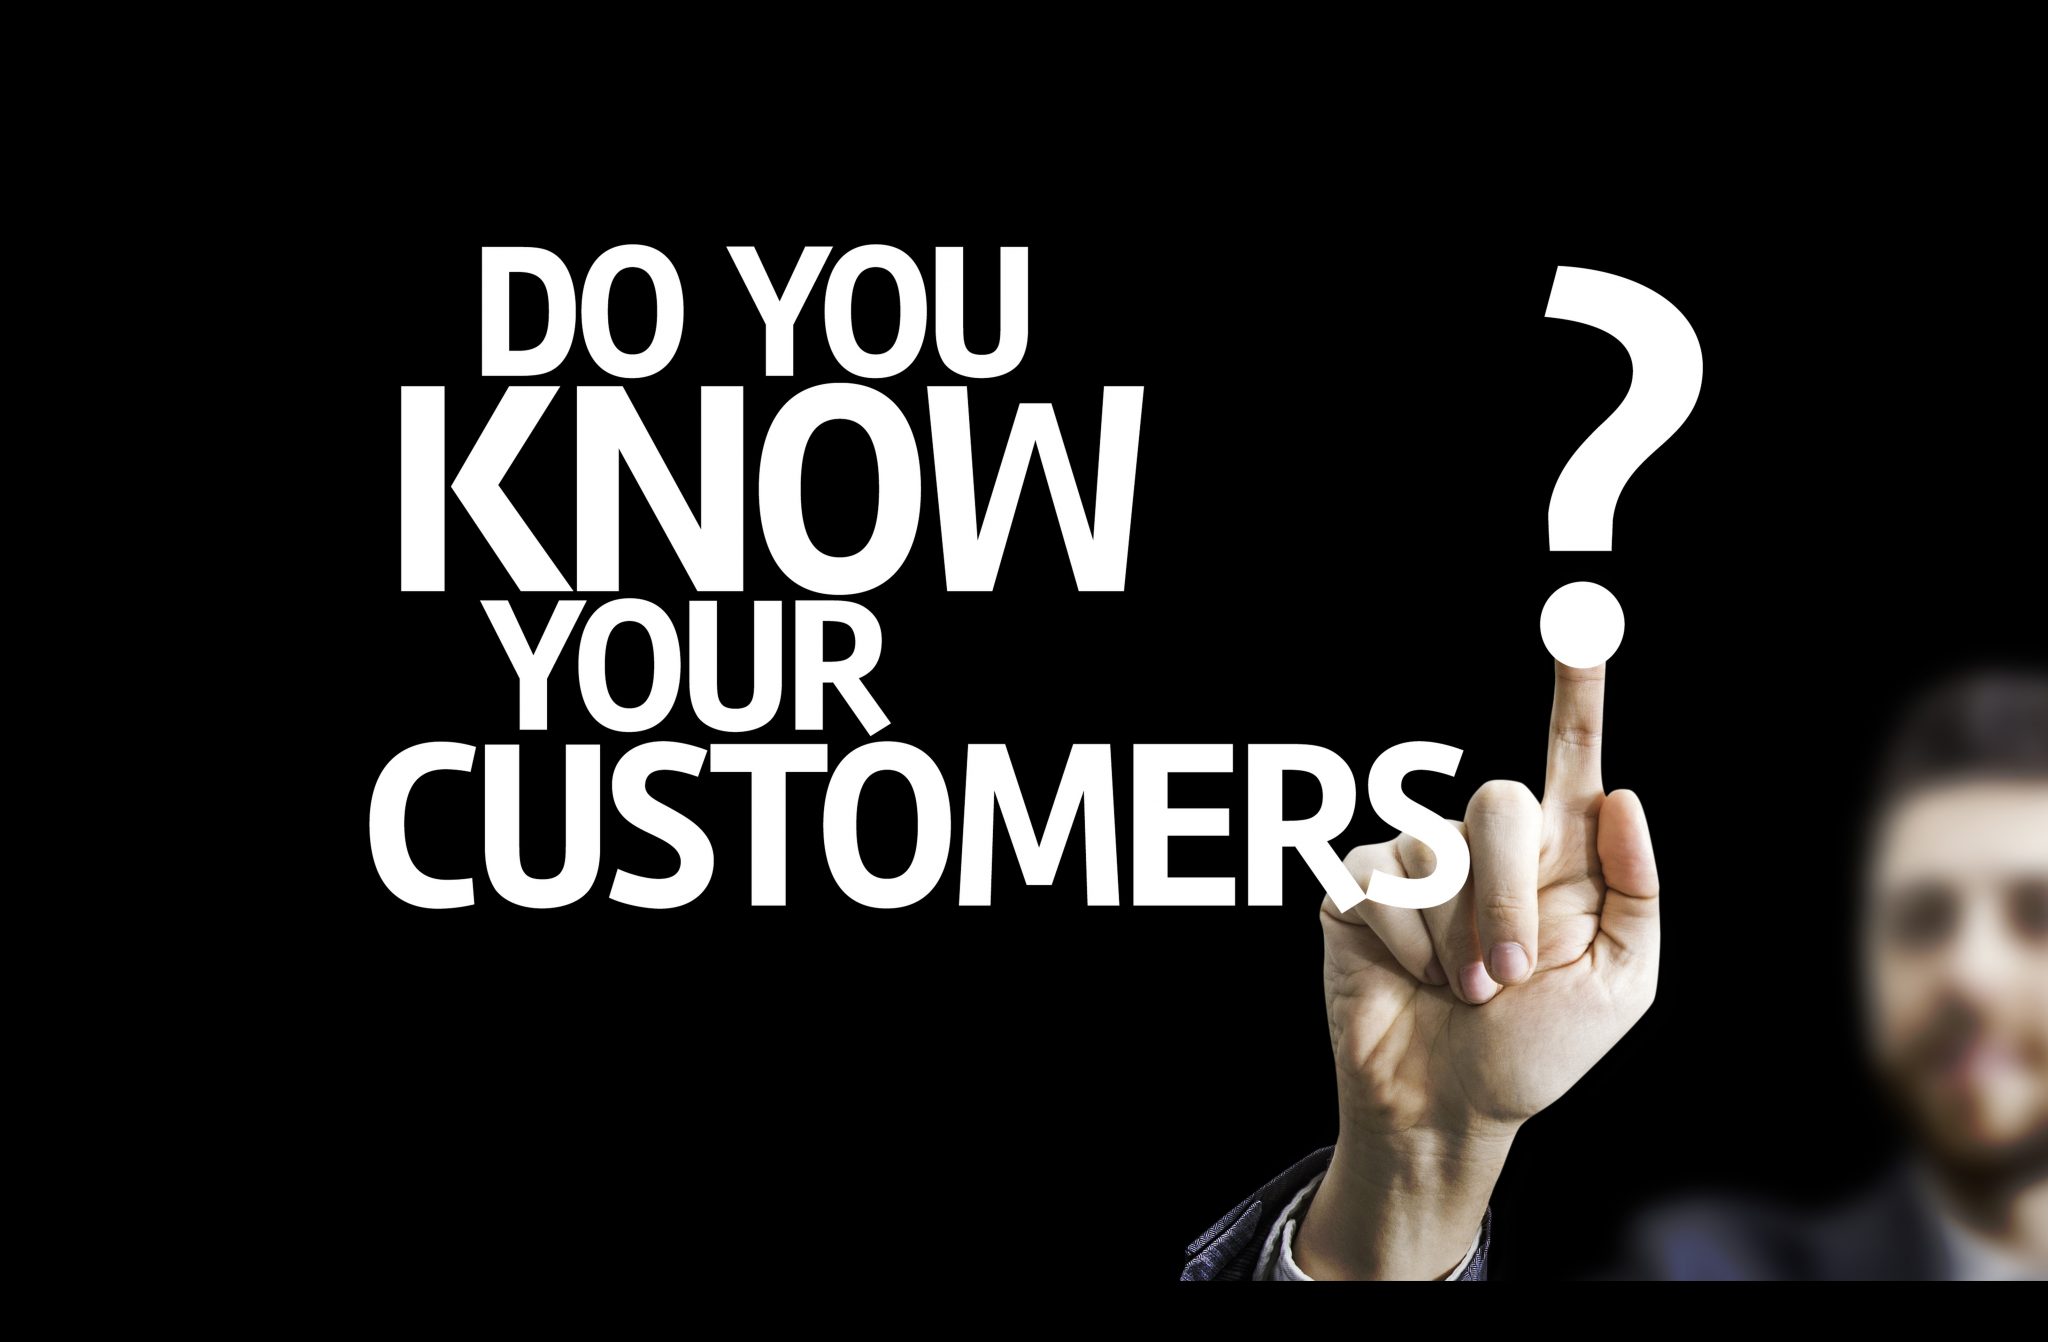 Right customer. Know your customer. Marketing Secrets.